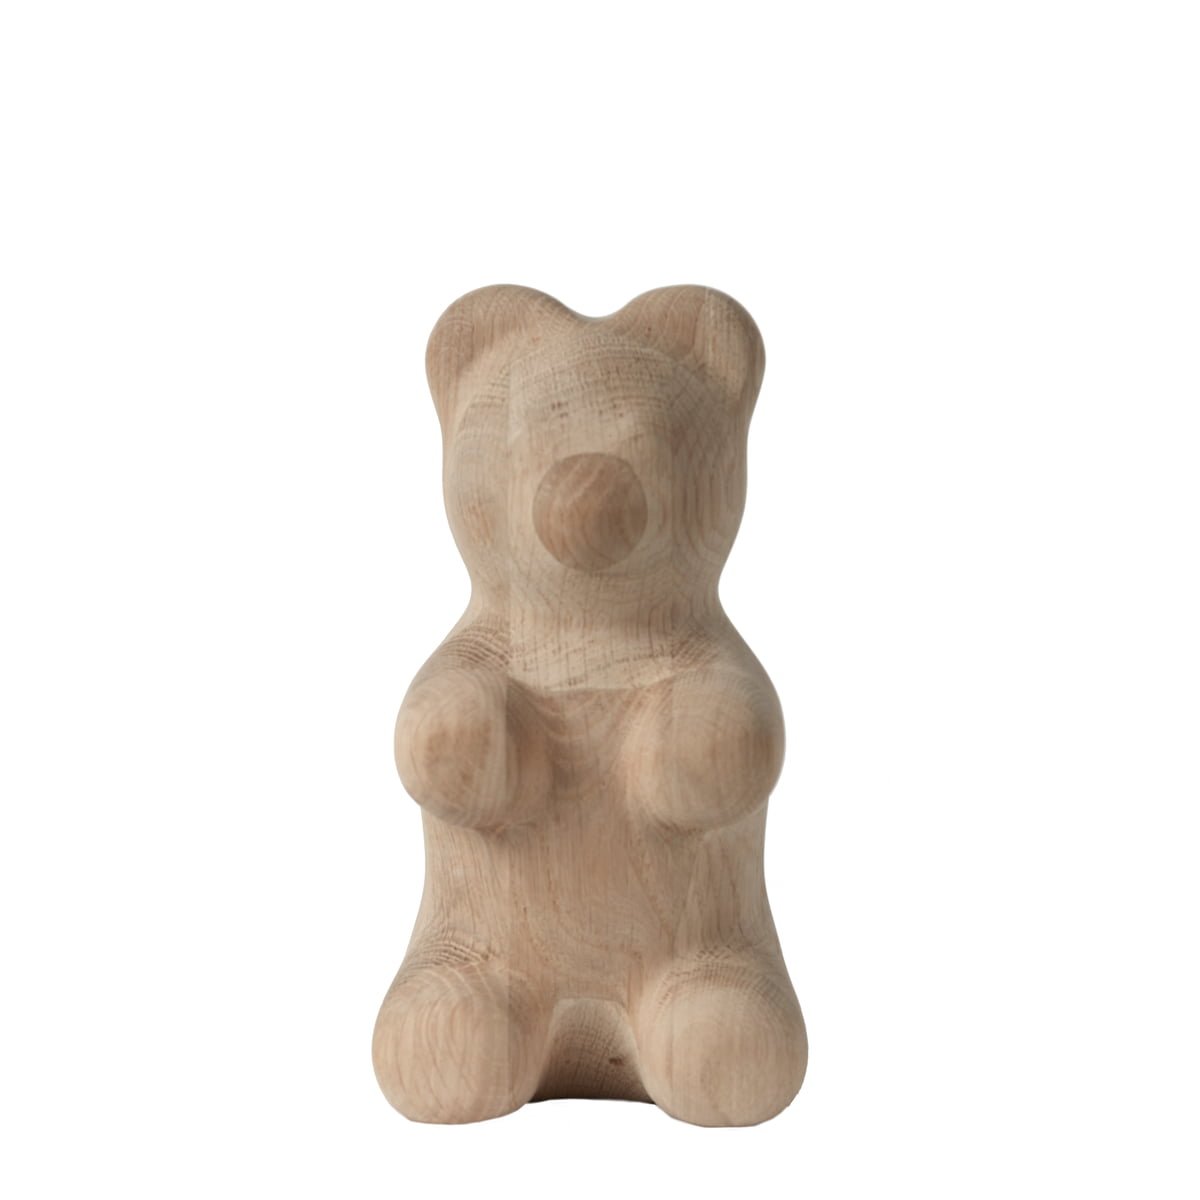 boyhood - gummy bear figurine en bois small, chêne naturel